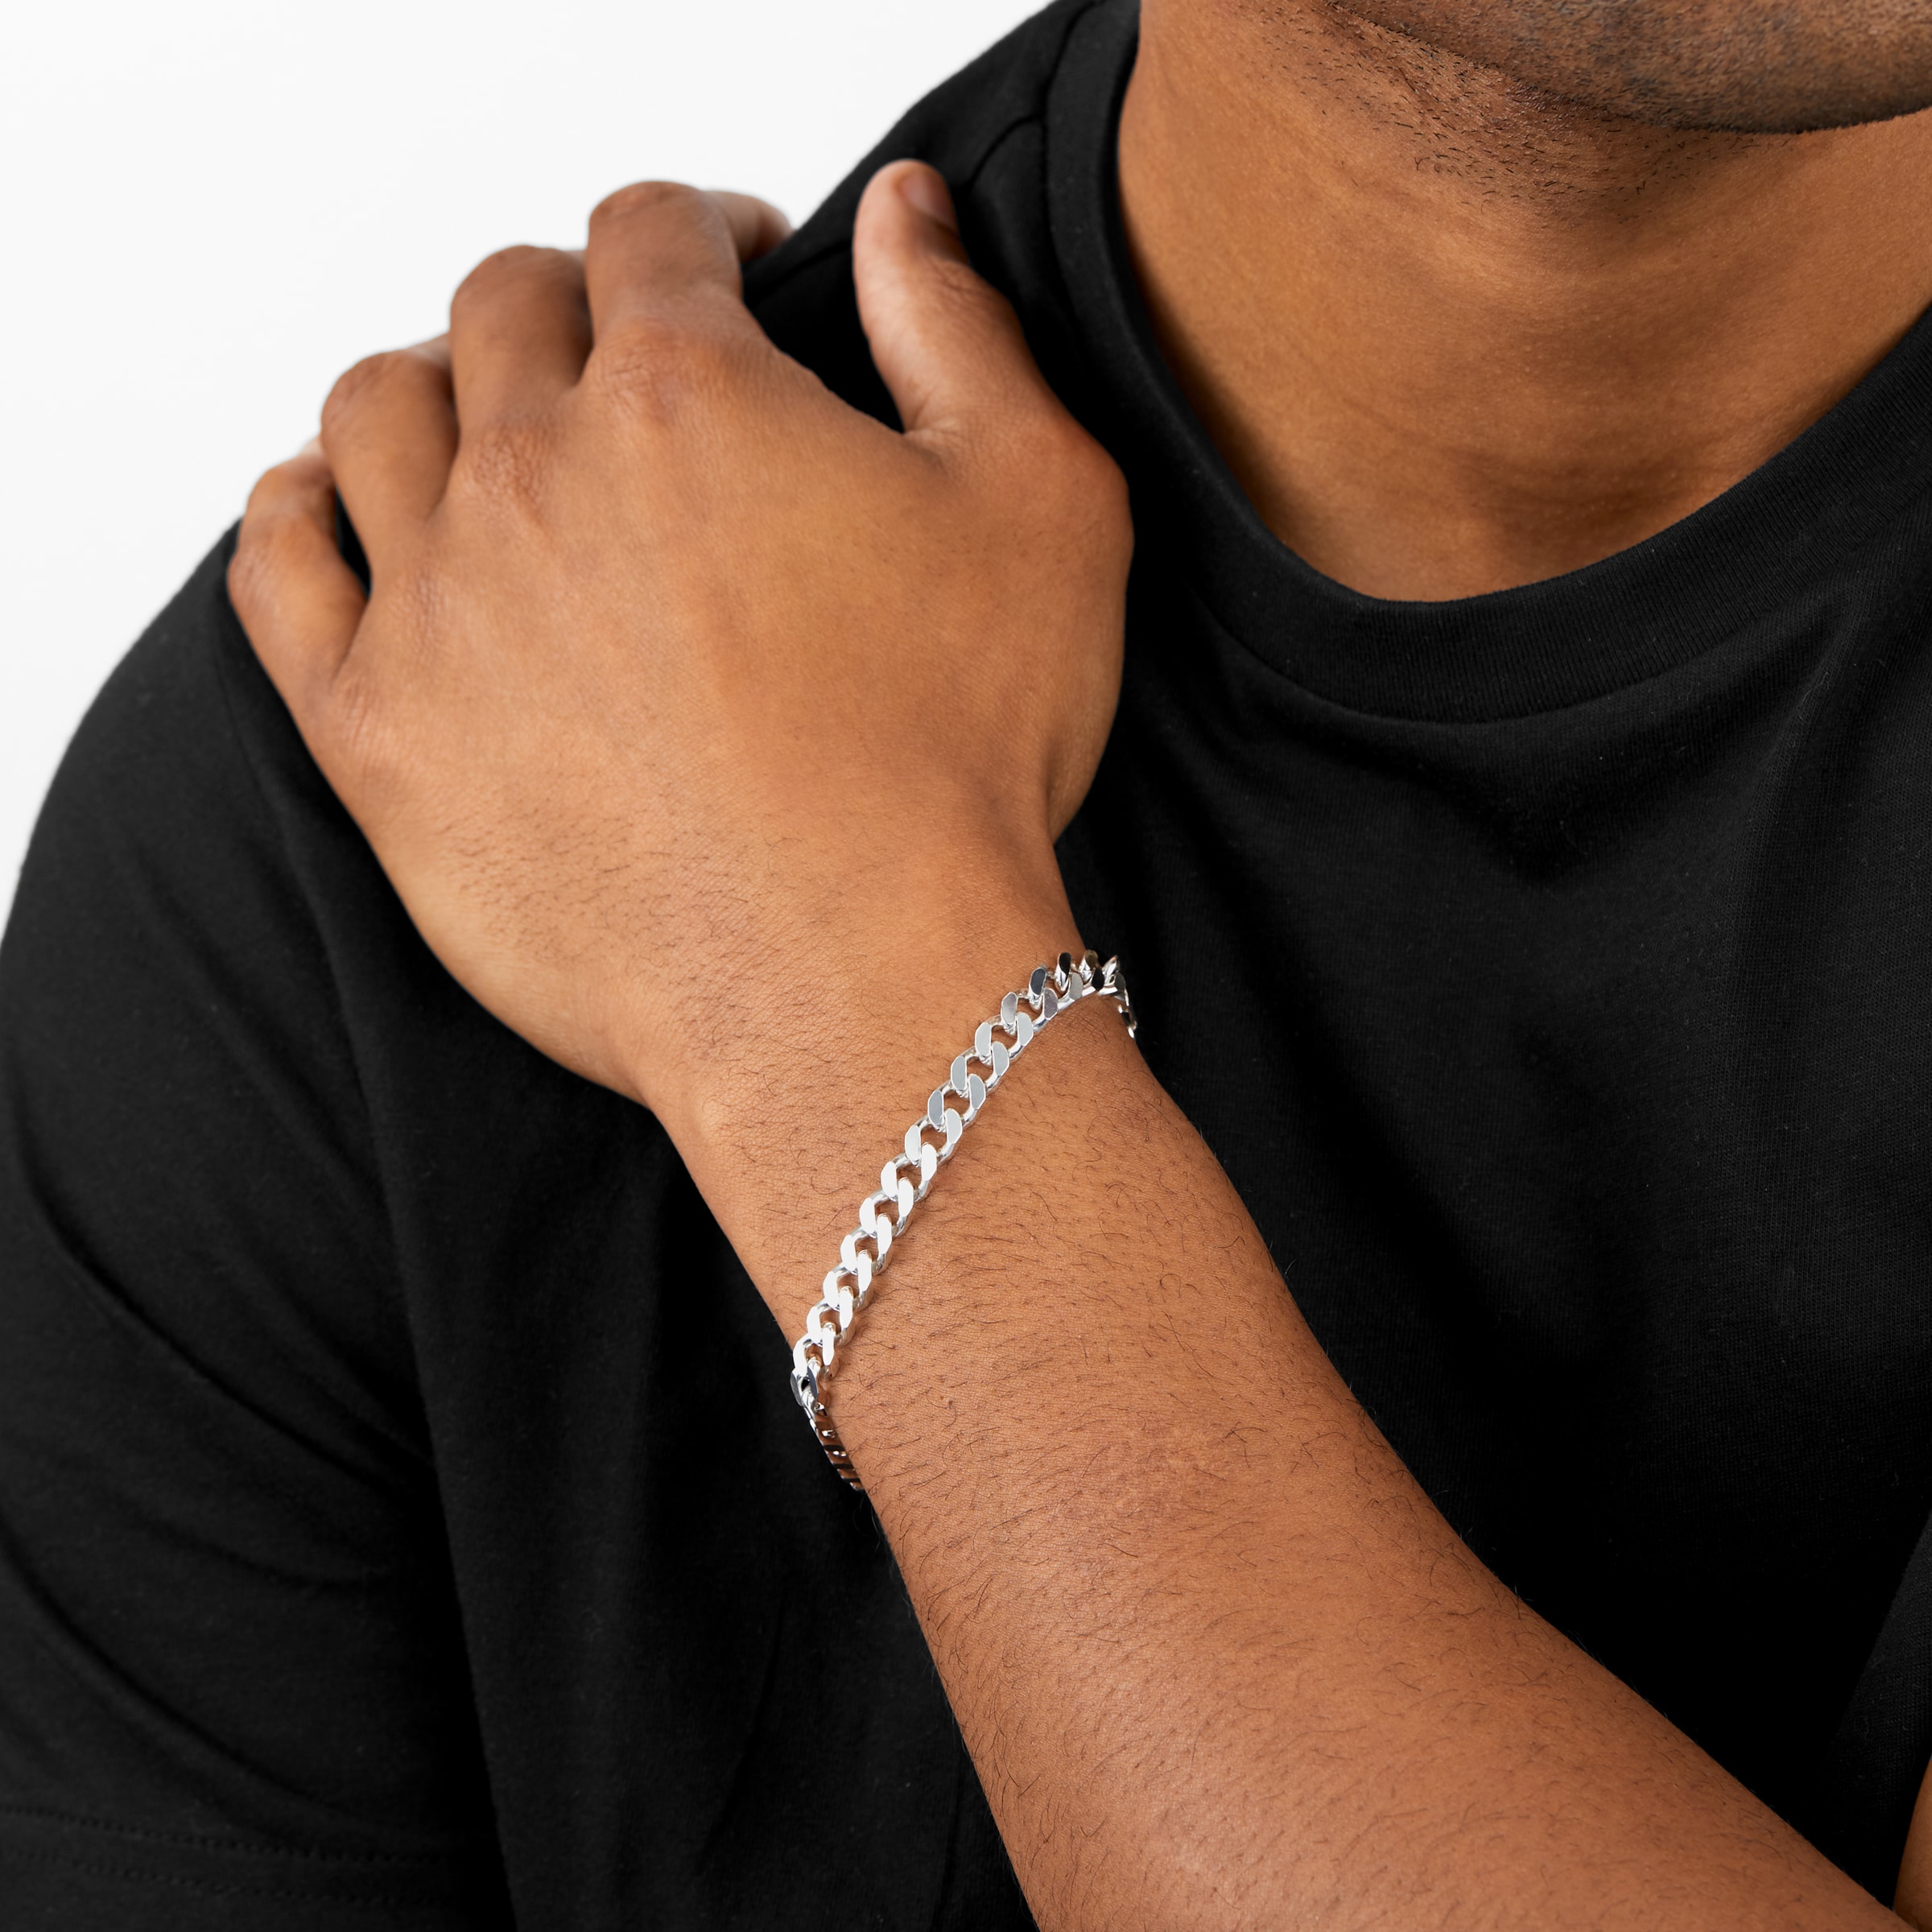 Buy ANSH Silver Salman Khan Heavy Bracelet For Mens/Boys (8 Inch) at  Amazon.in